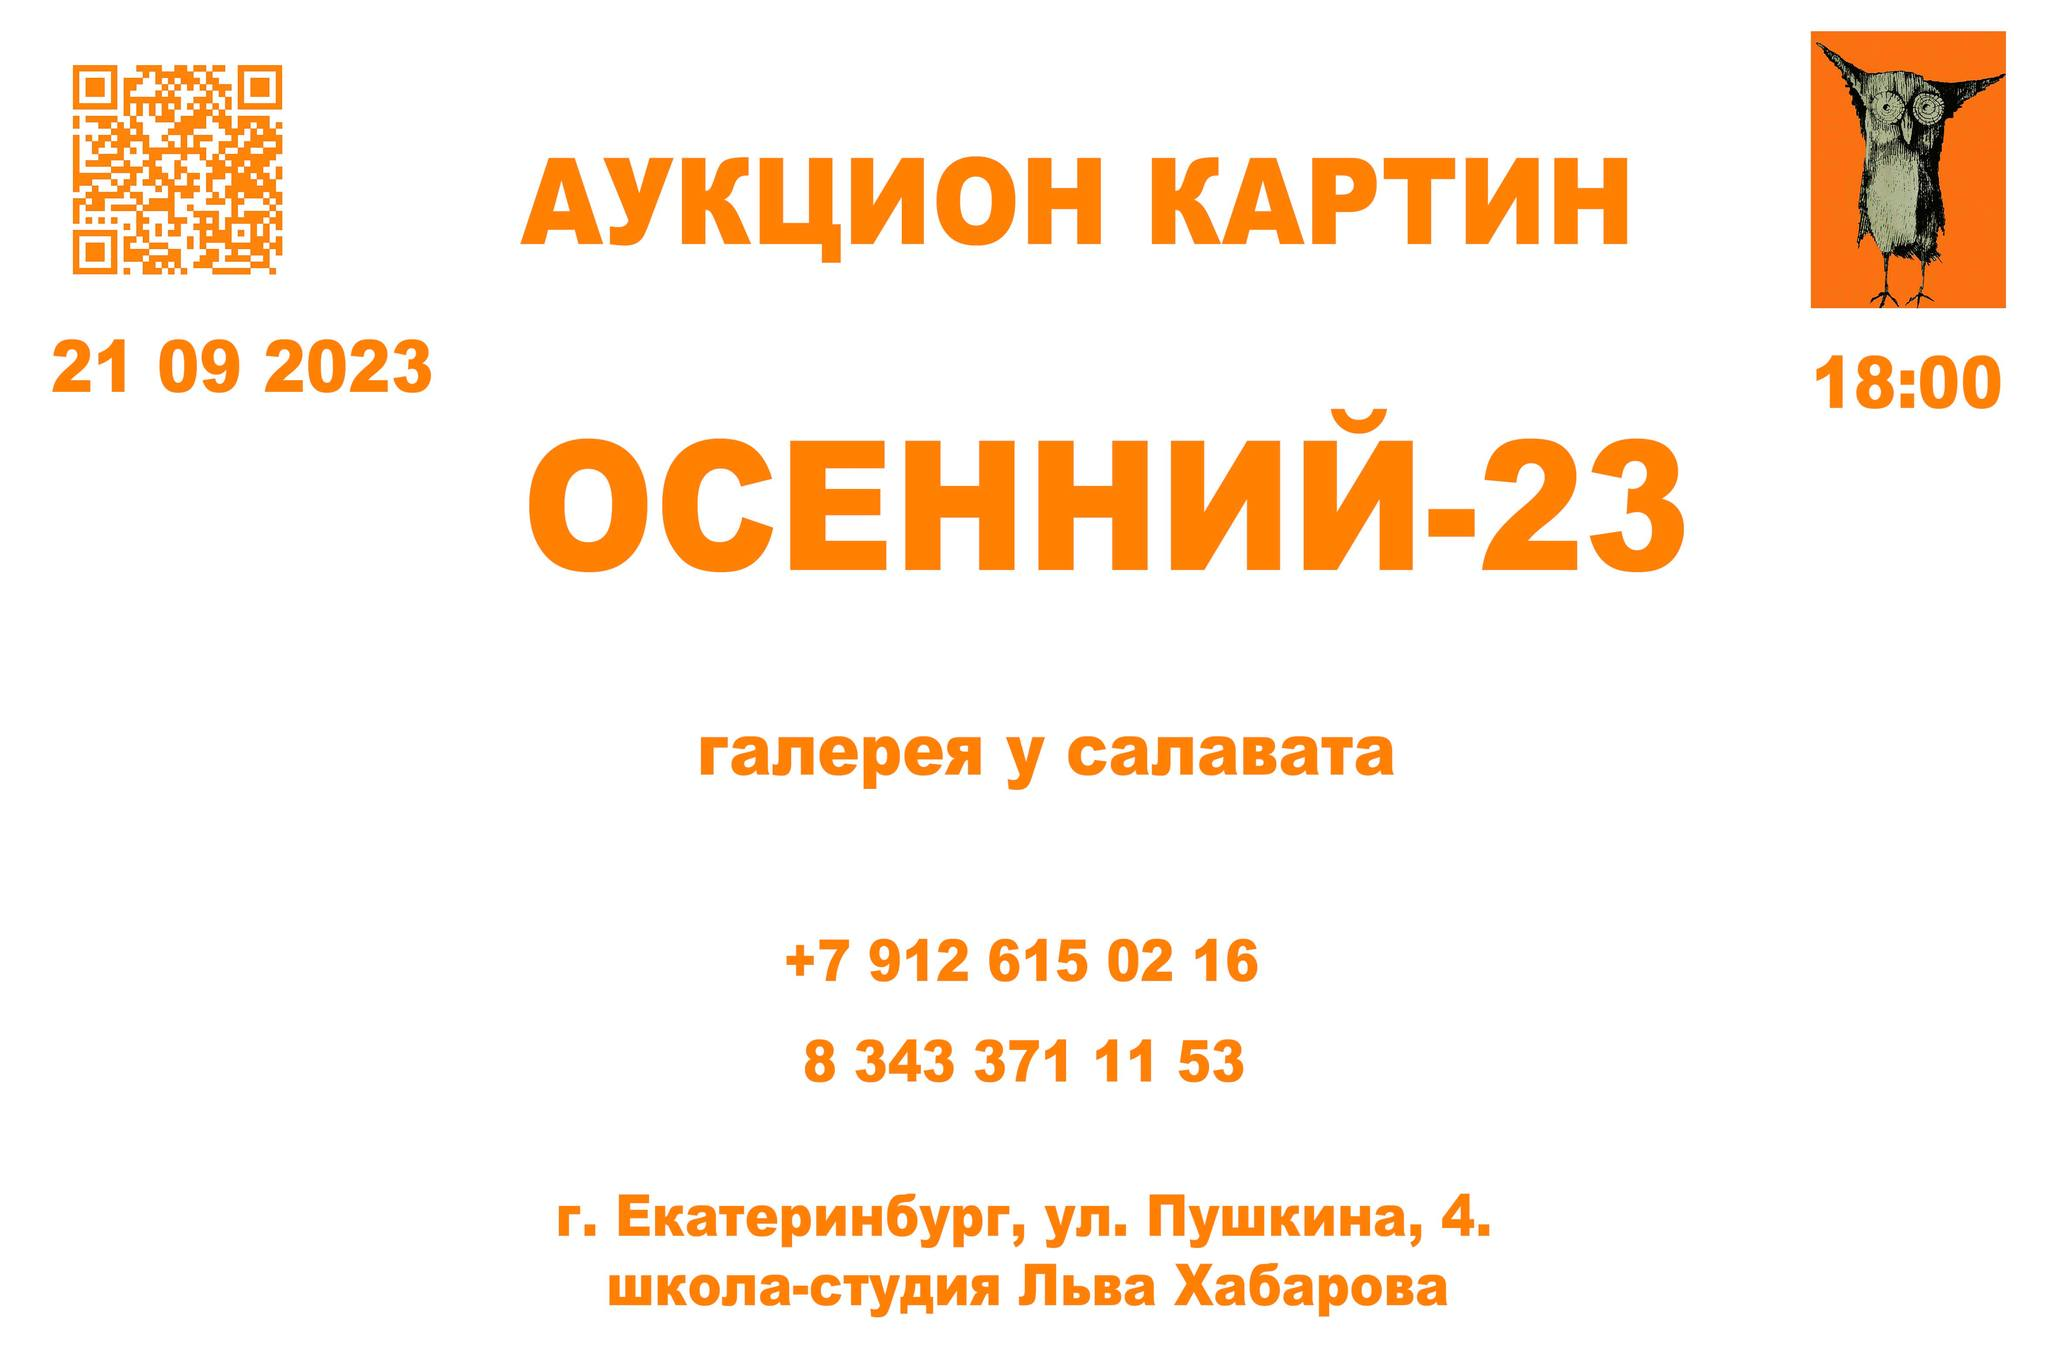 аукцион картин художников «Осенний-23». 21 09 2023